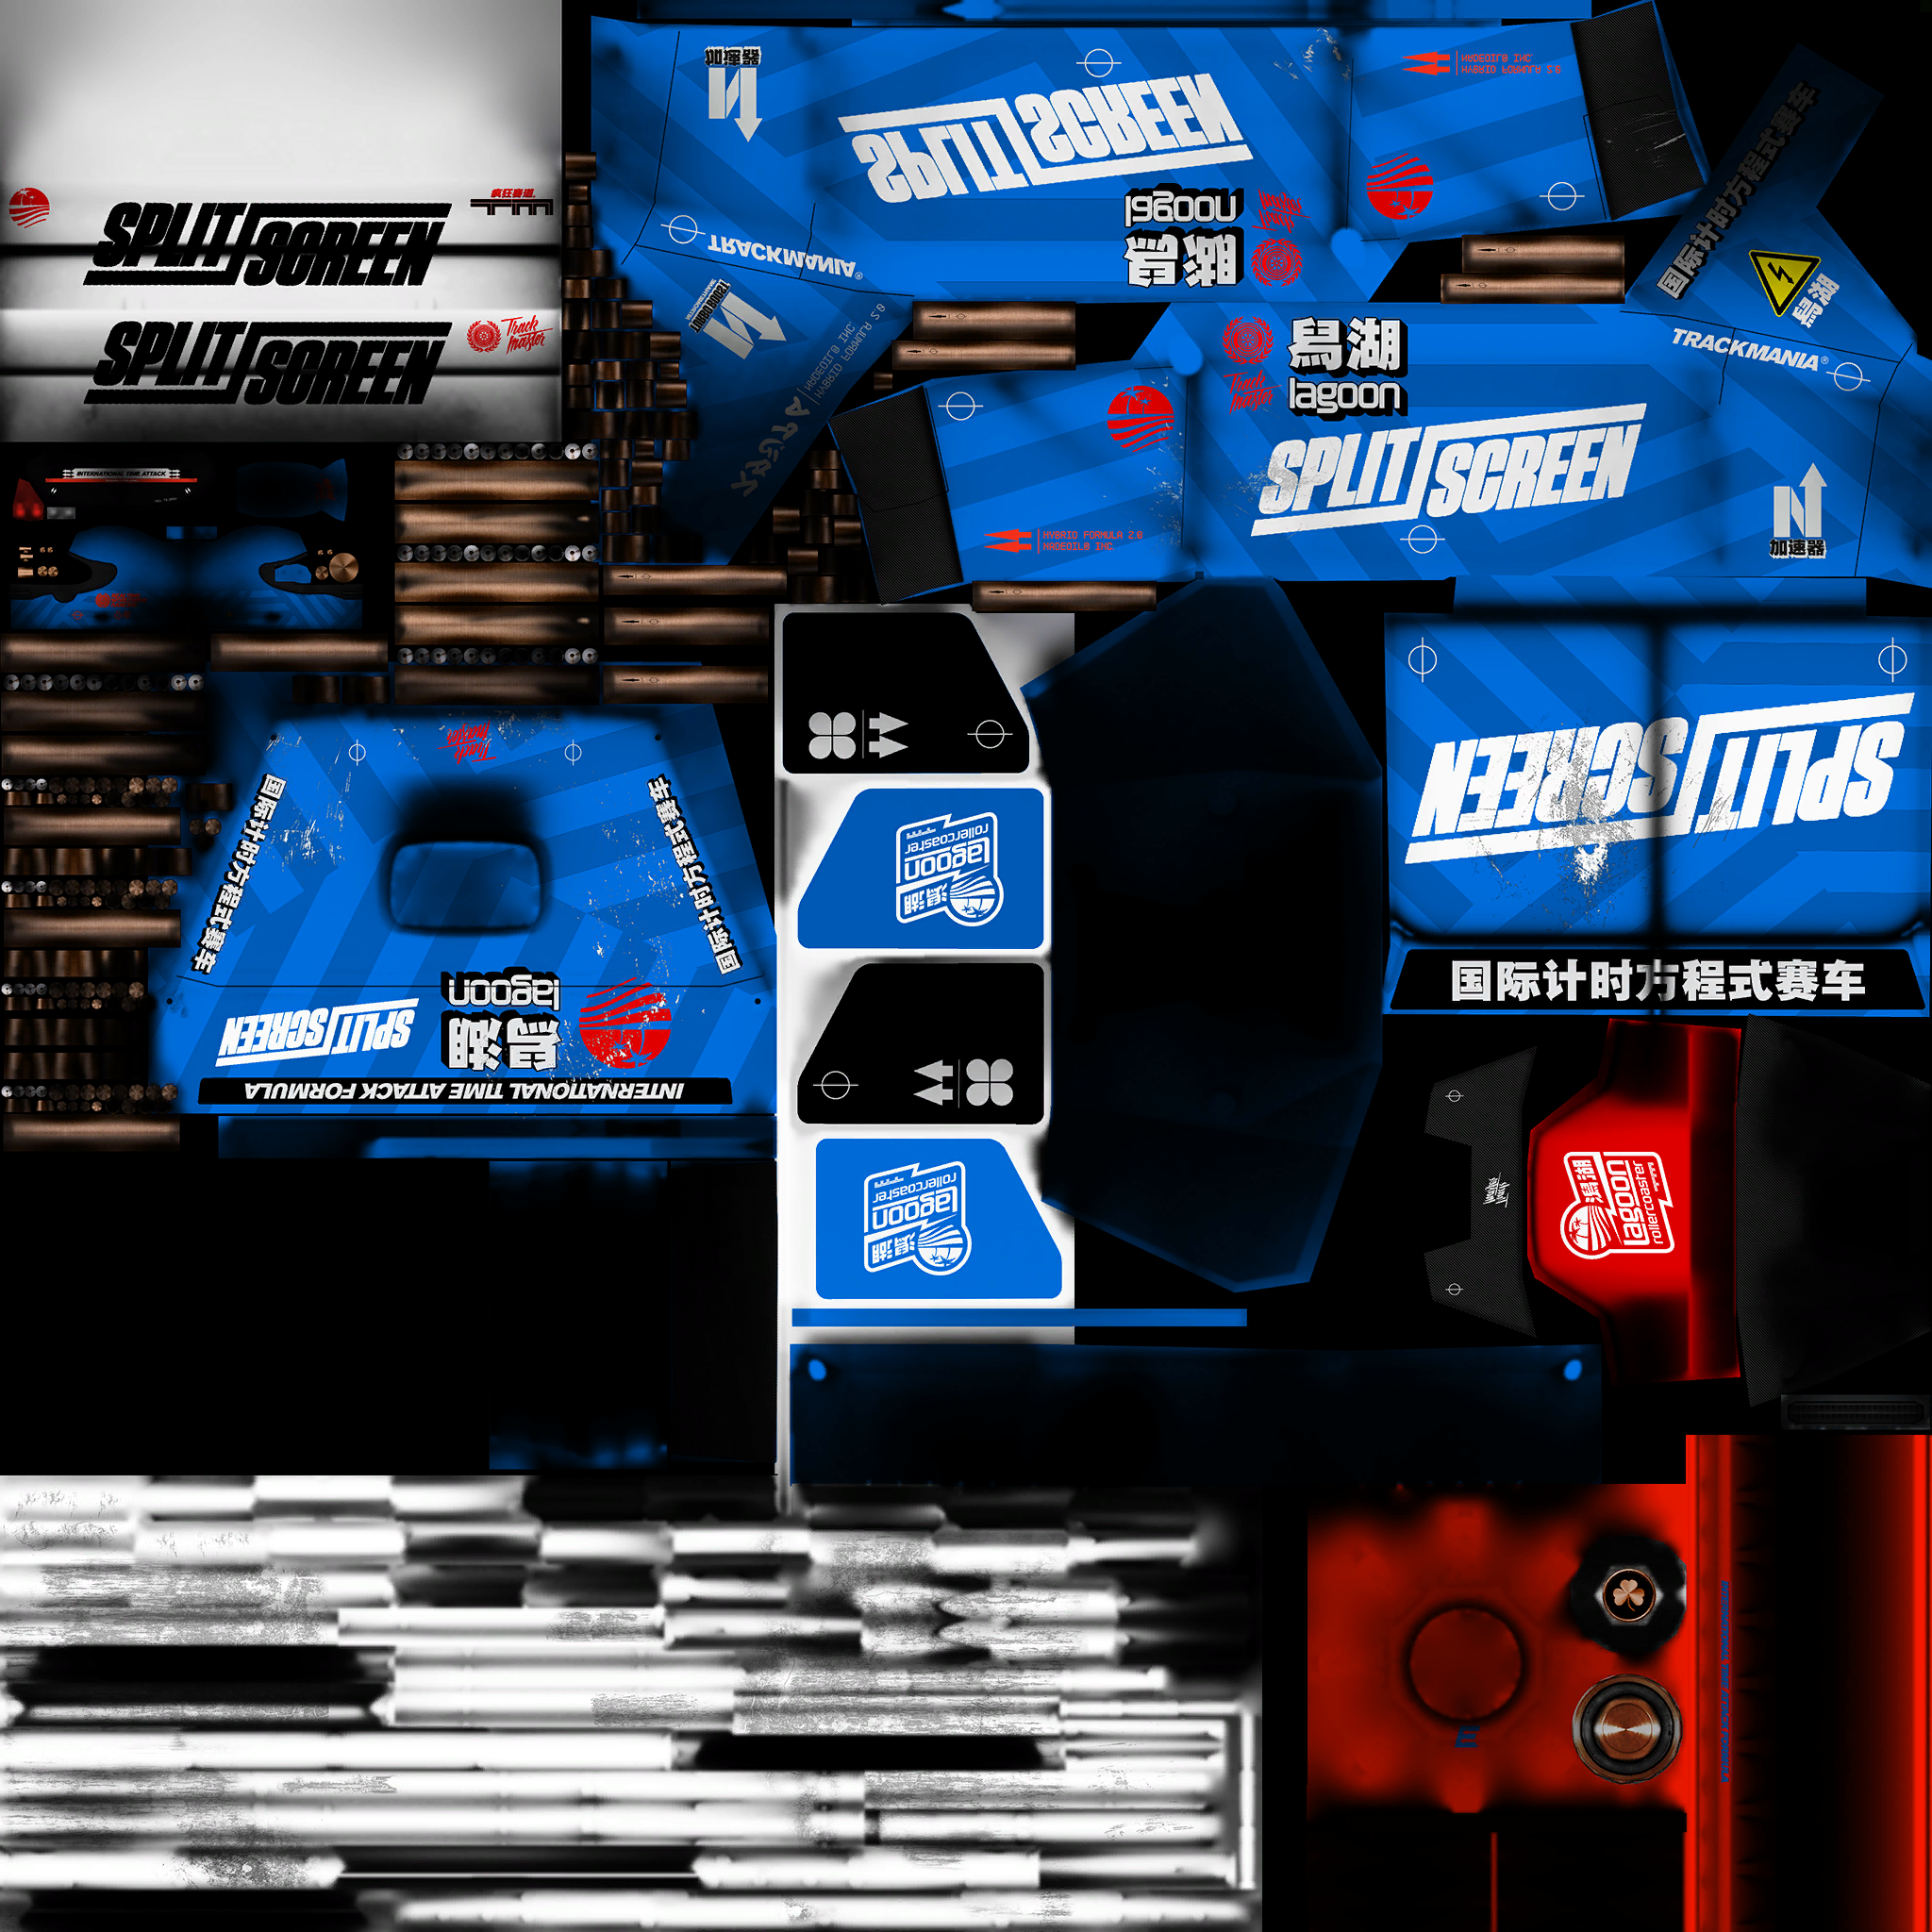 TrackMania Turbo - Splitscreen Blue